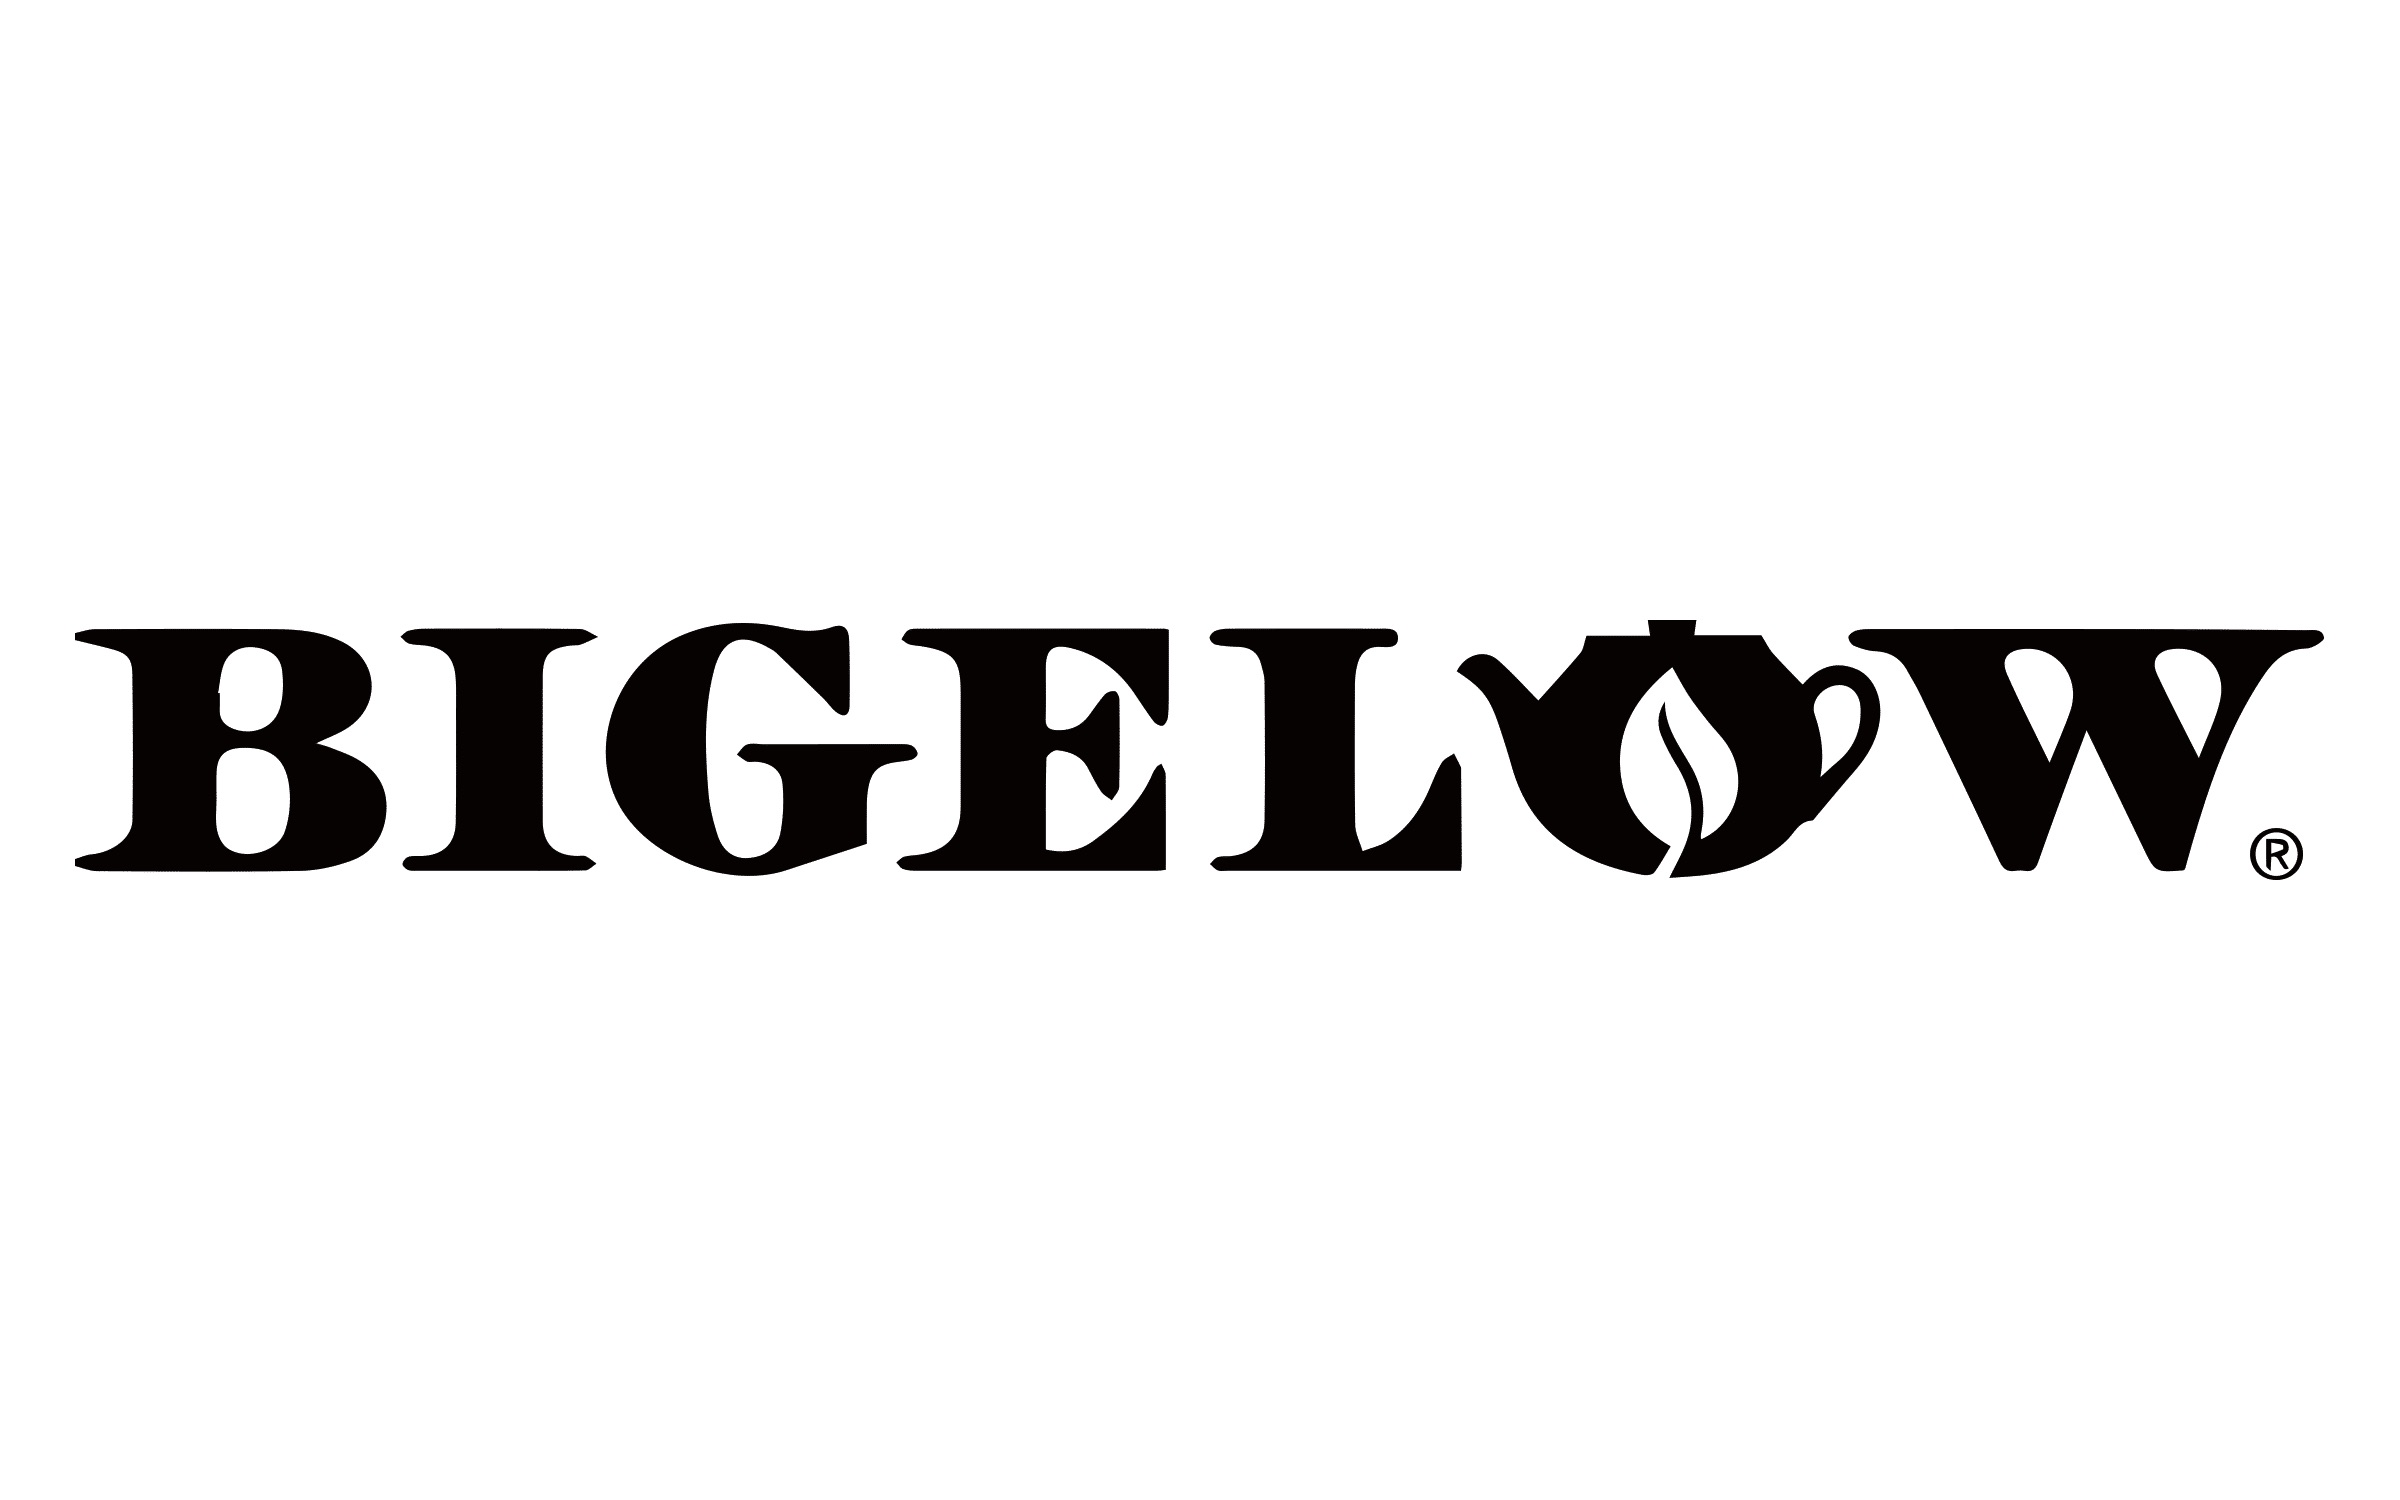 bigelow-logo